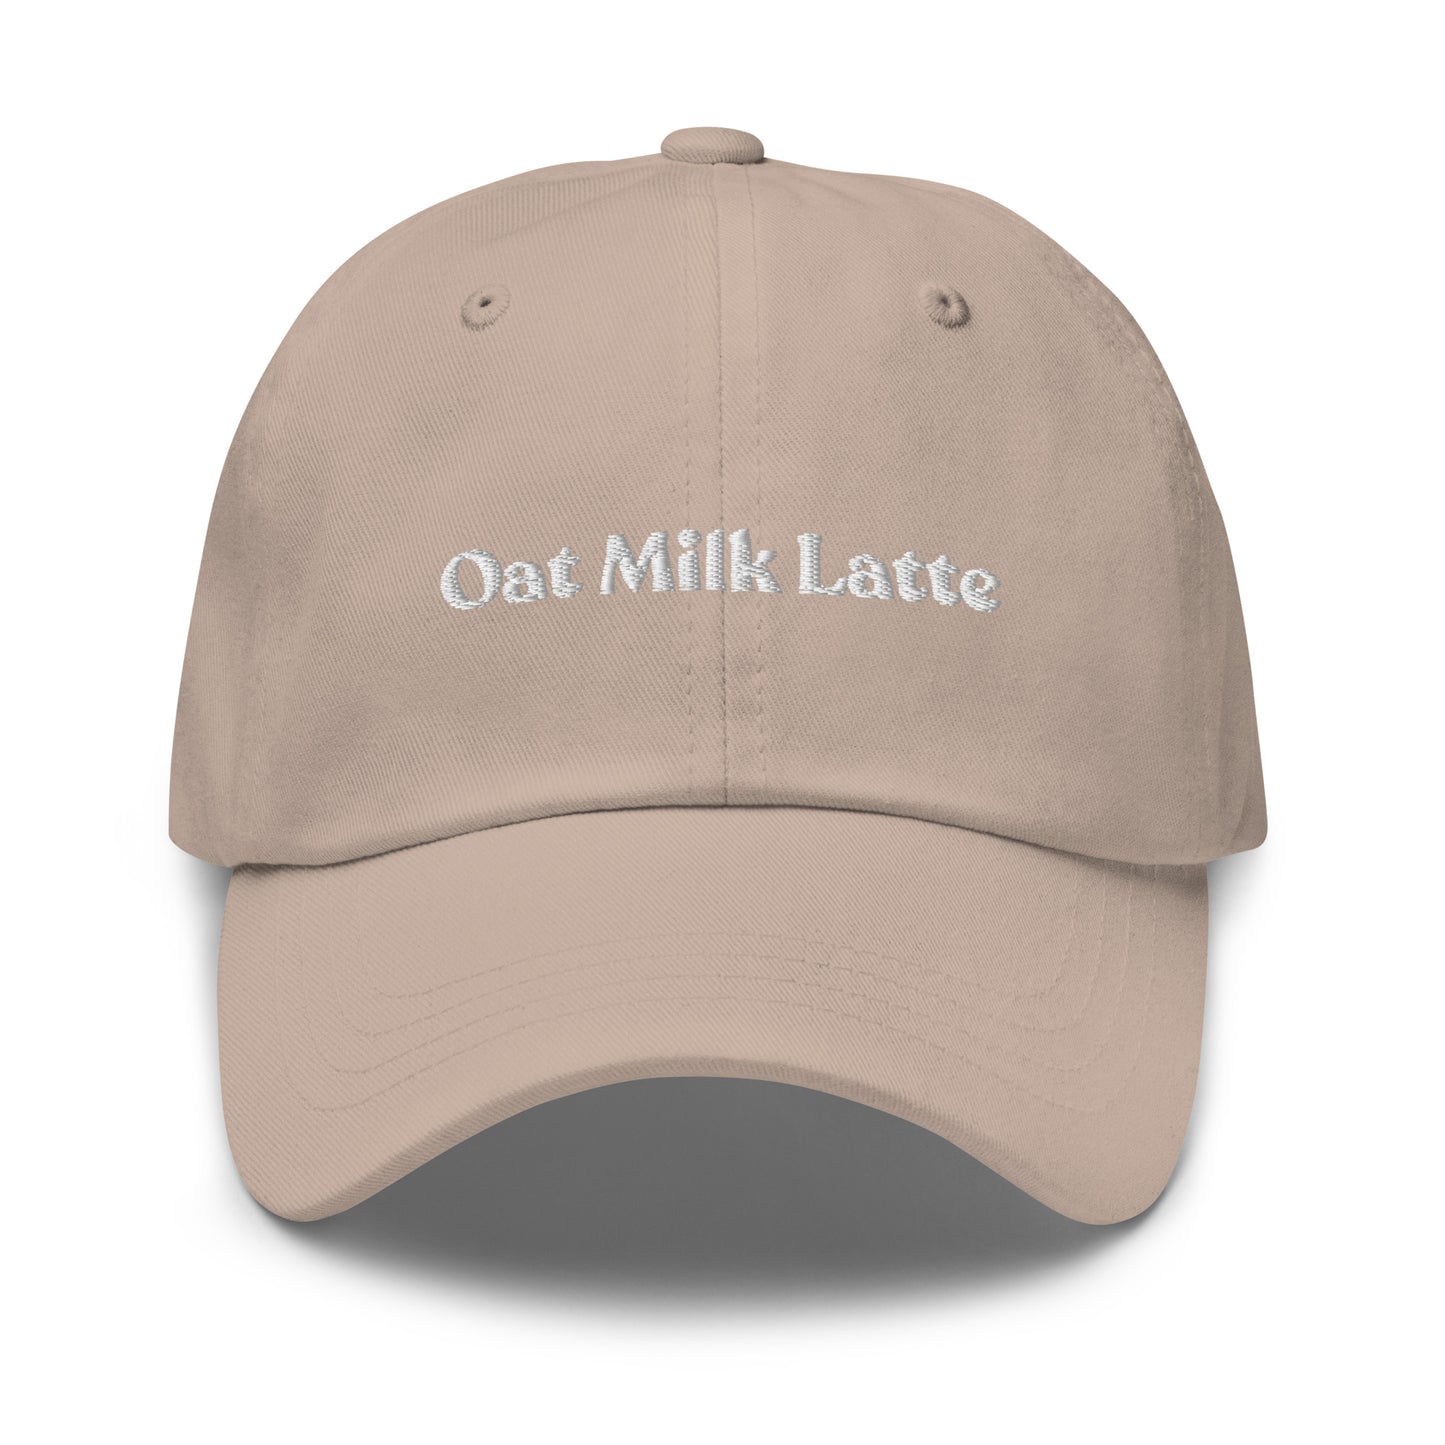 Oat Milk Latte Baseball Cap